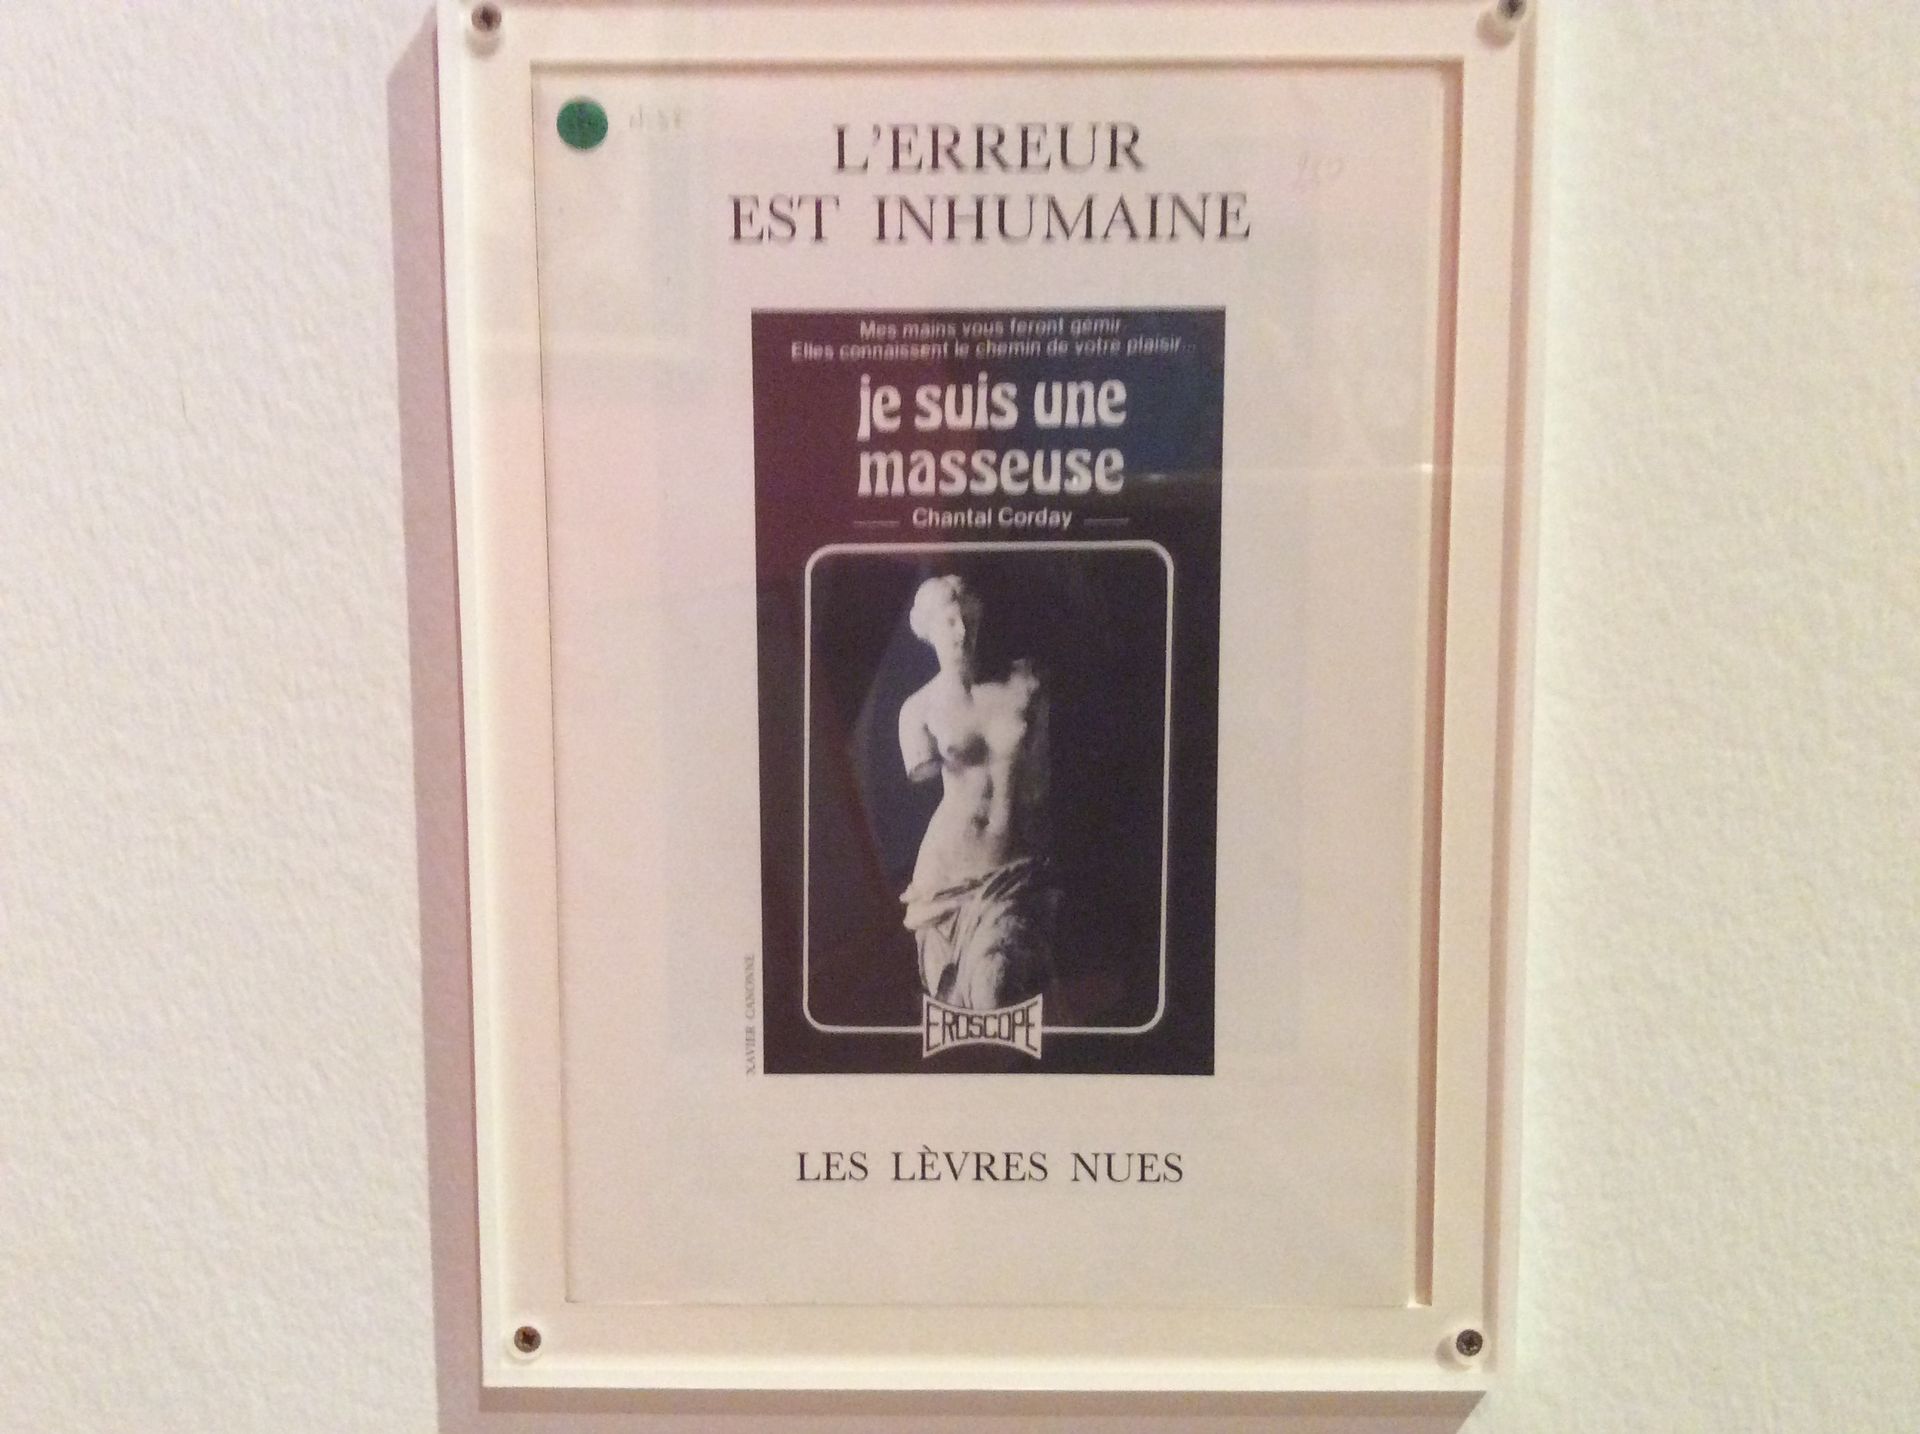 Marcel Mariën, revue "Les Lèvres nues"